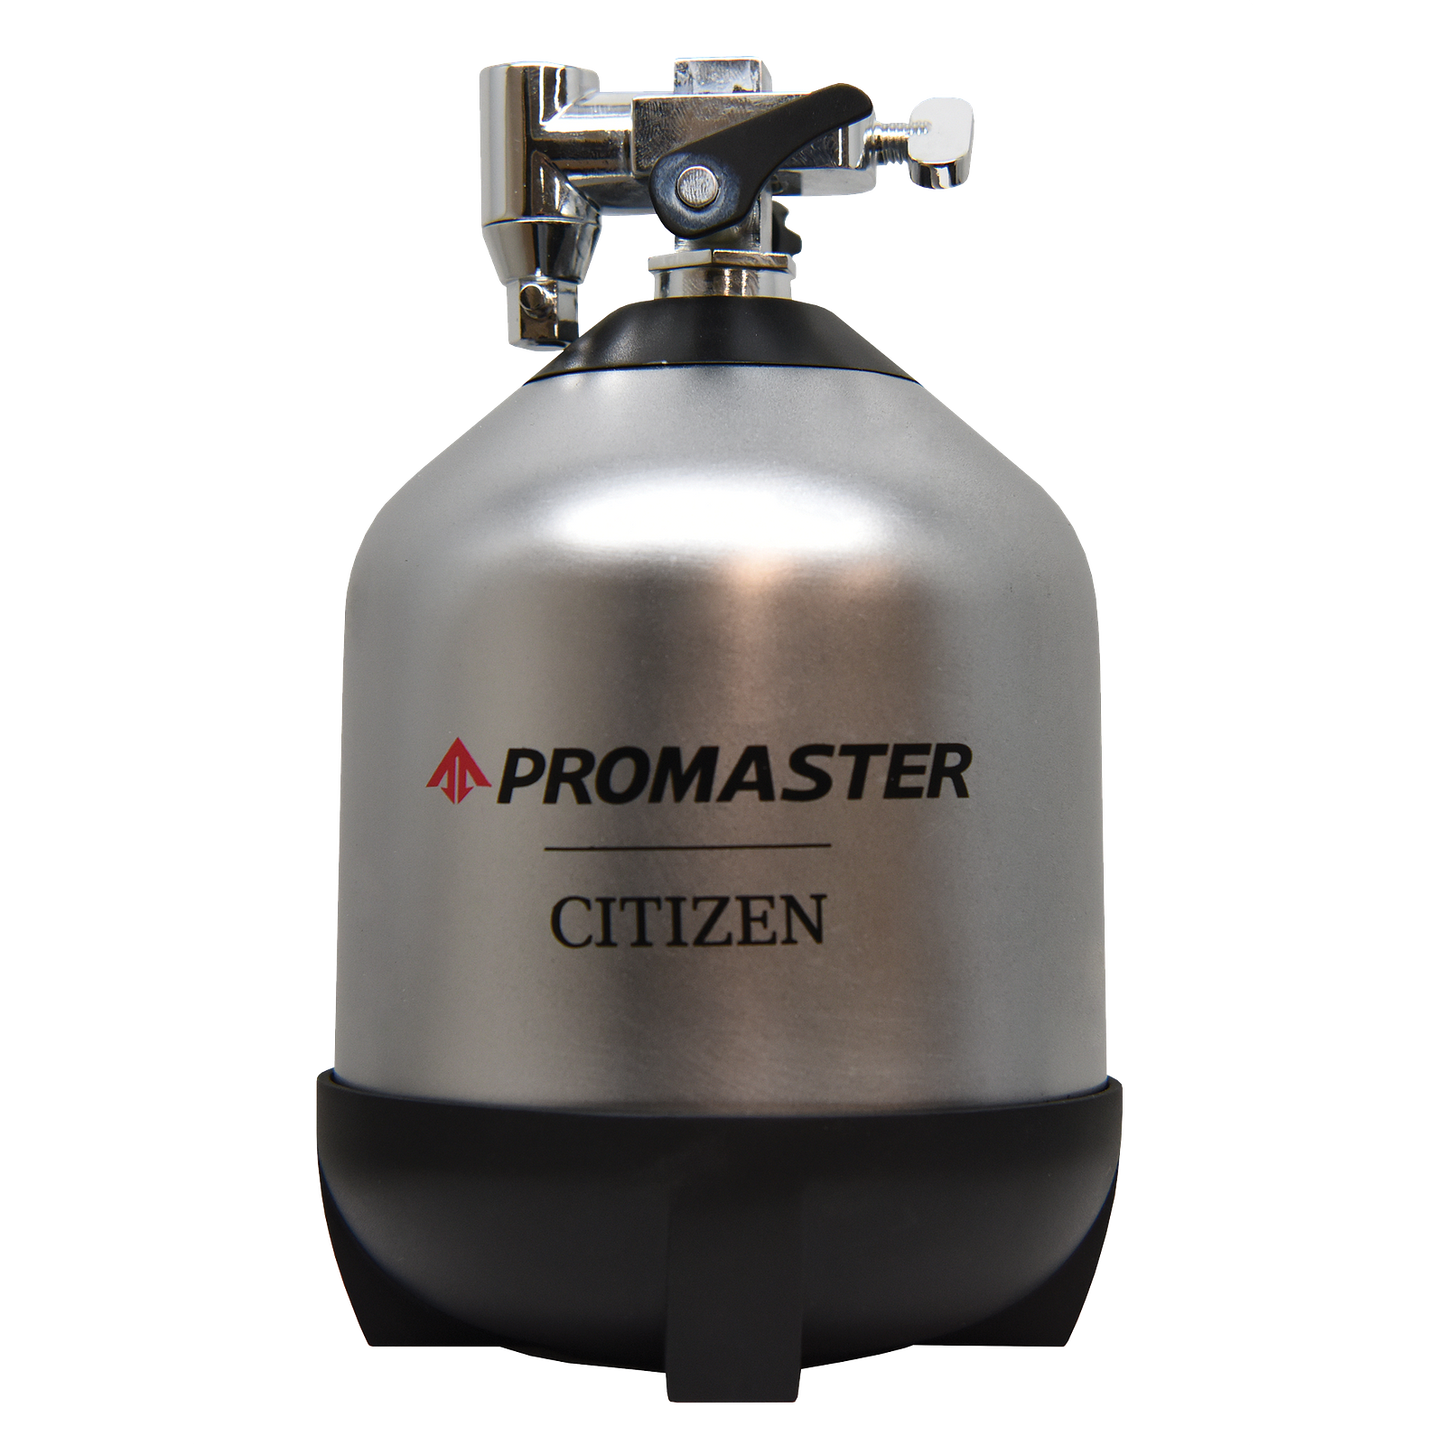 Citizen Promaster Dive Automatic Mens Watch (Ny0130-08E) Black Dial